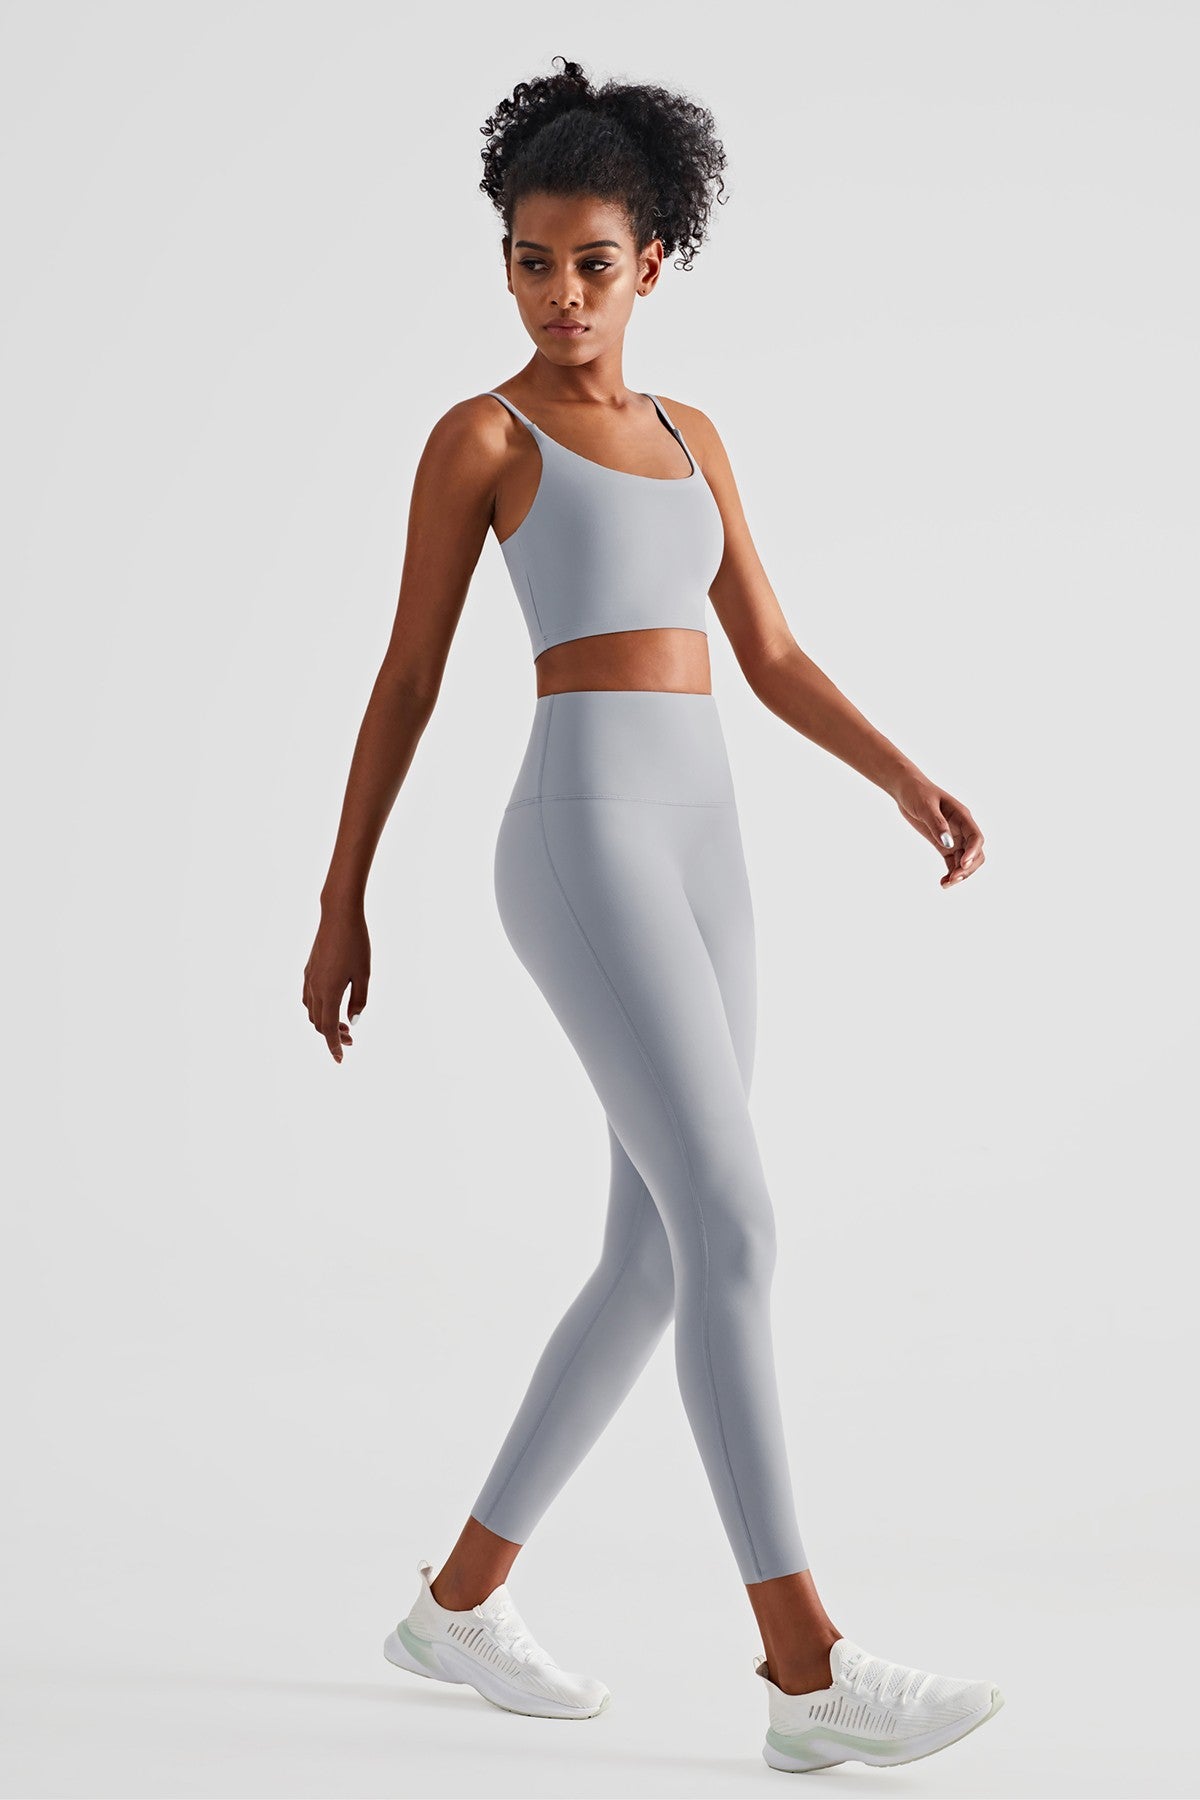 womens sports bra skinny strap White Spaghetti Strap Yoga Athleisure